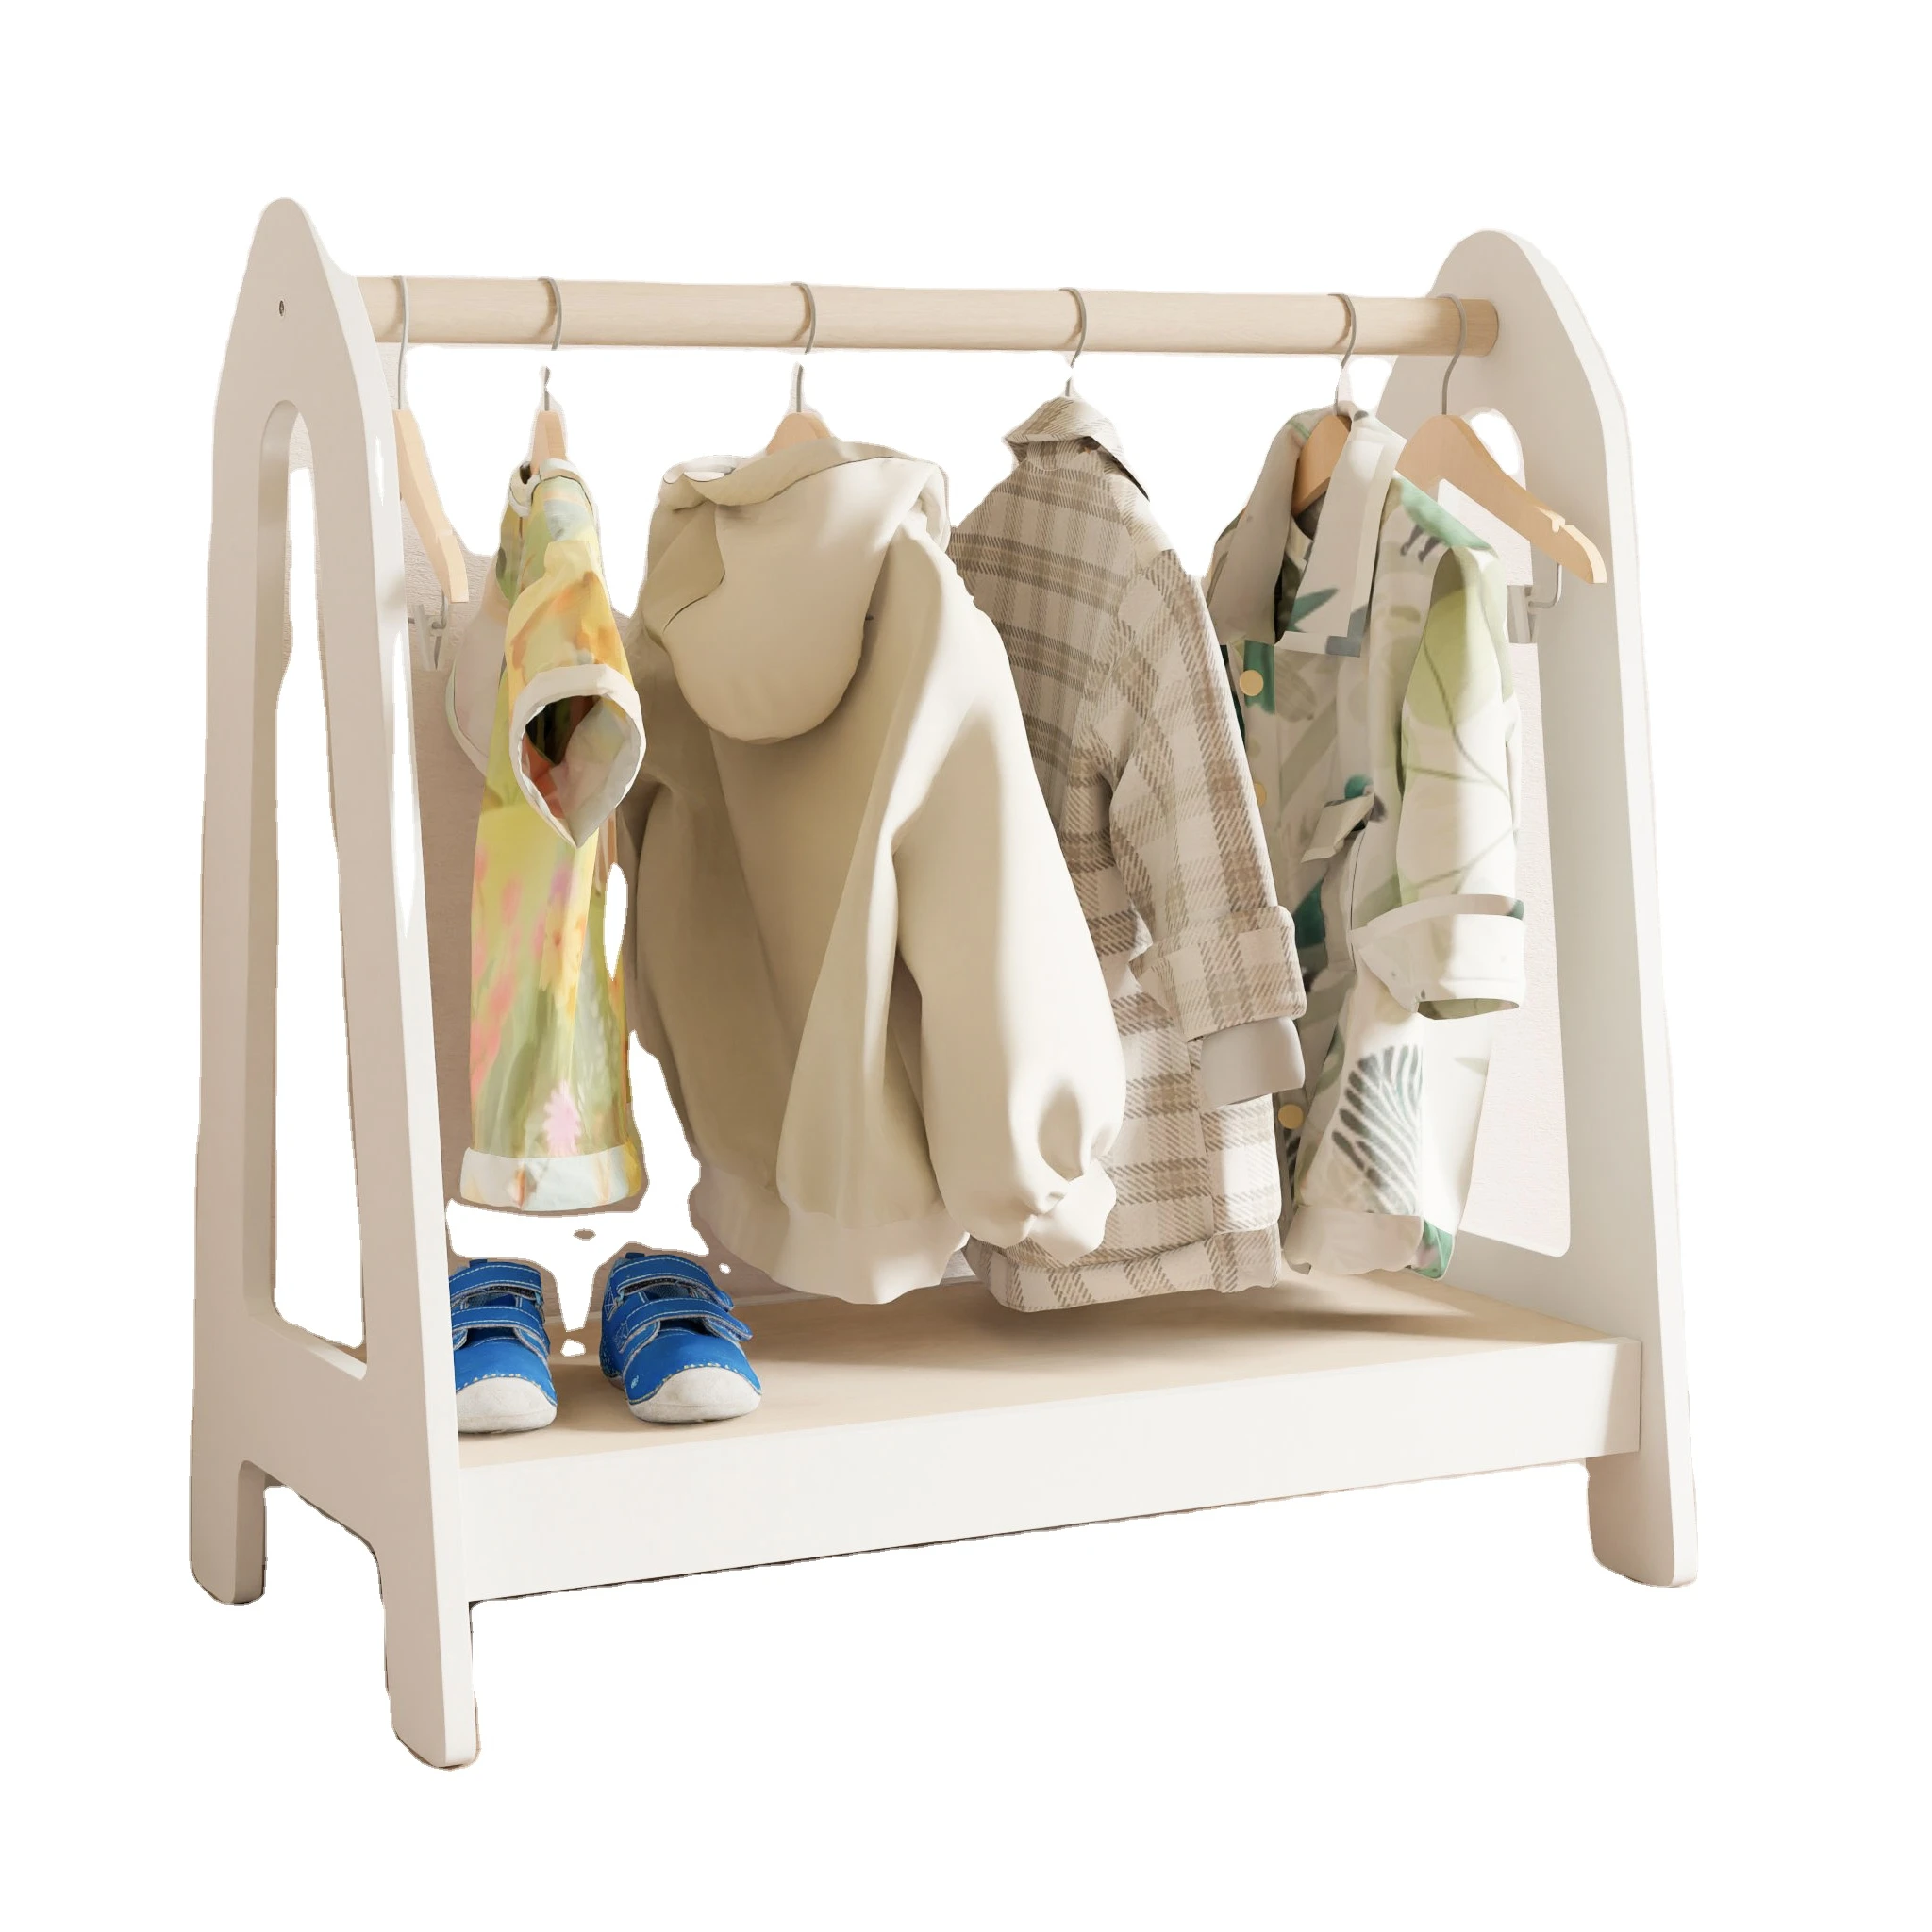 Wood Clothing Rack, Display Rack Clothes Hanger Kids Furniture